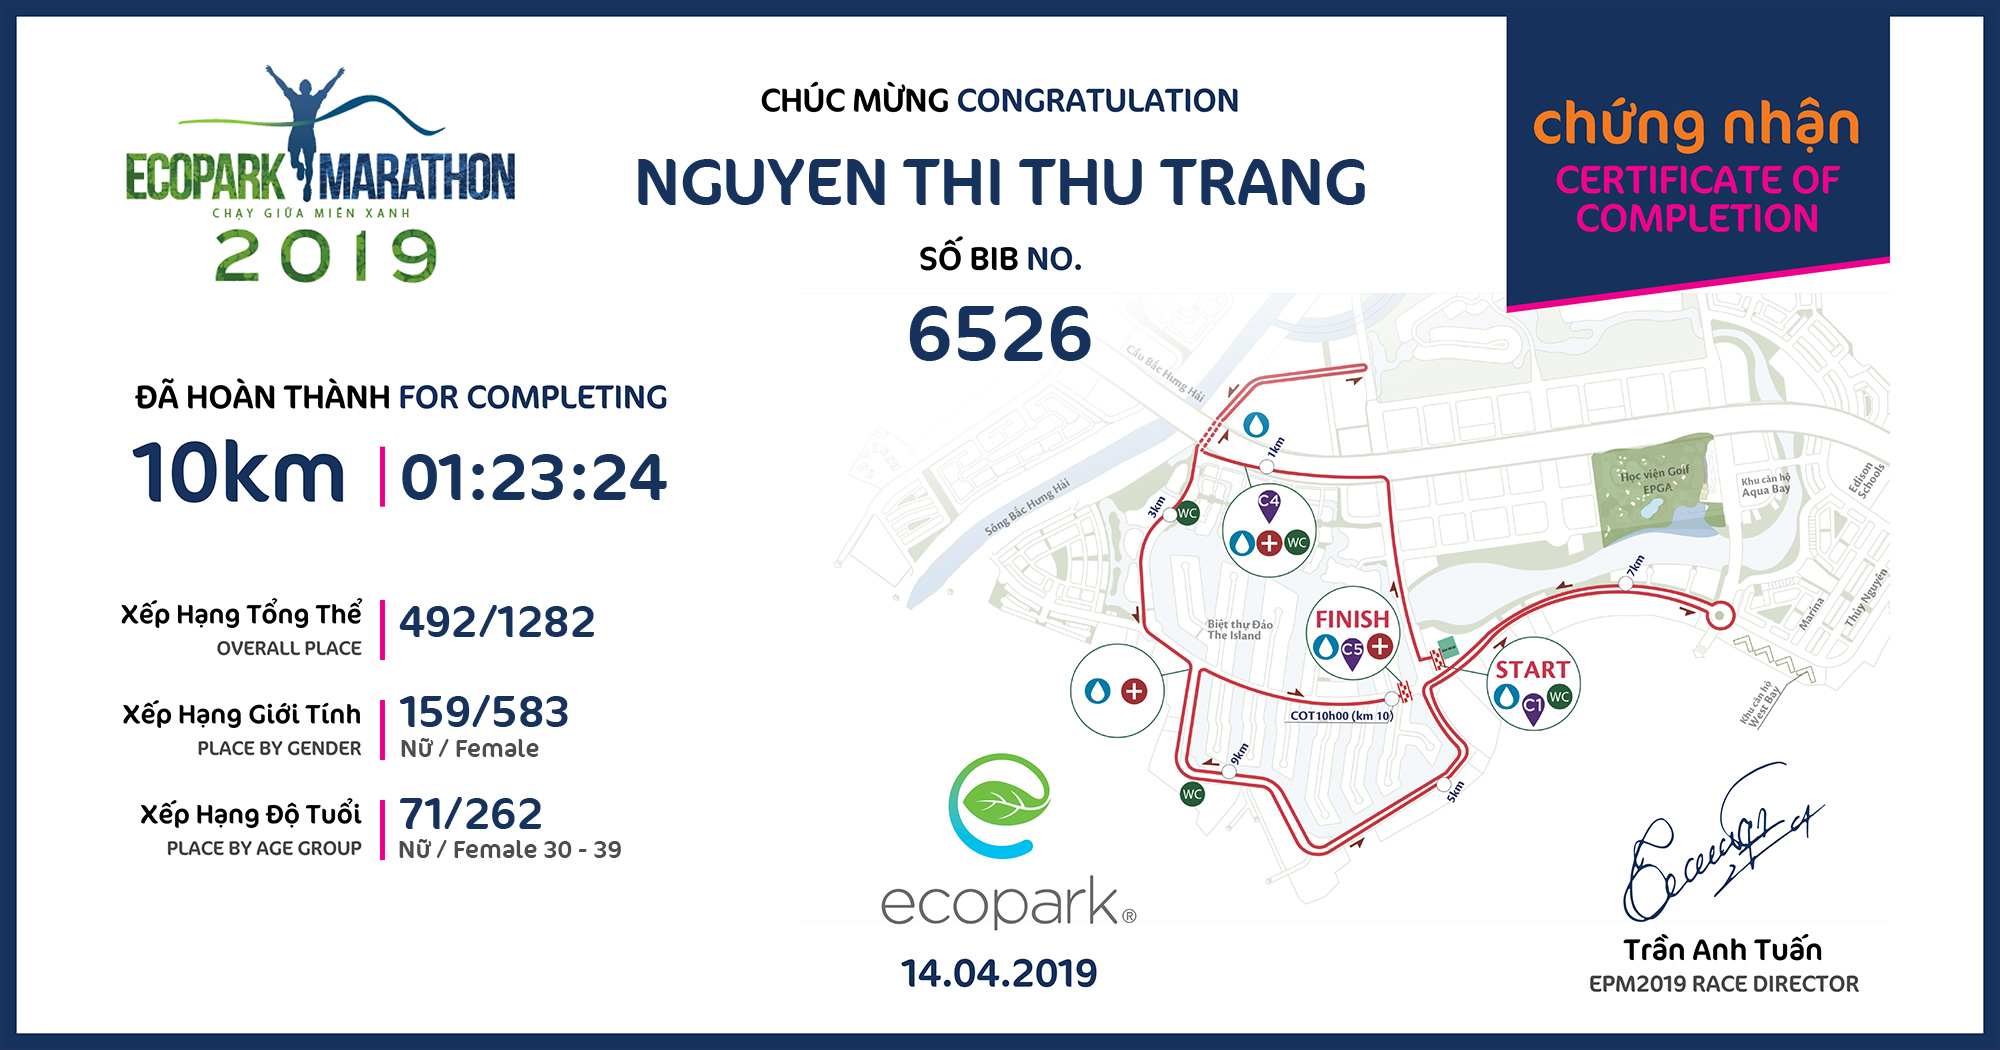 6526 - Nguyen Thi Thu Trang